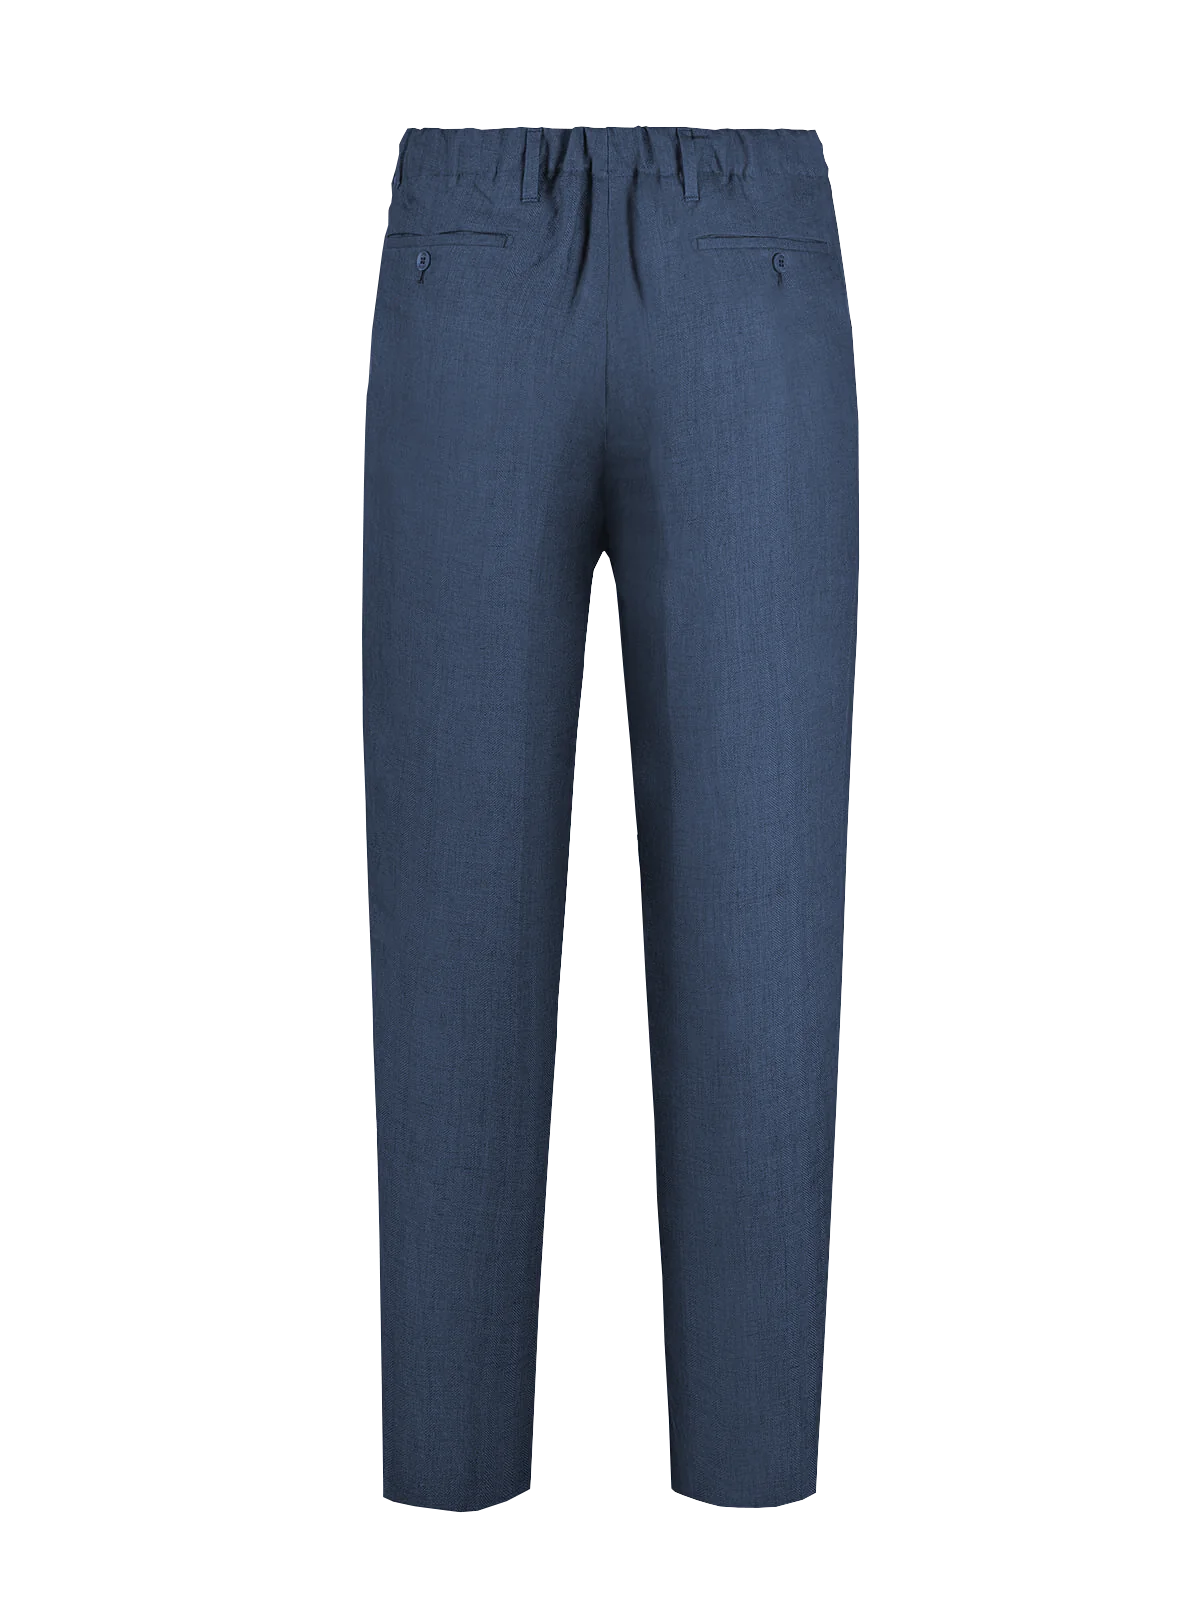 Pantalone Positano 100% capri for Man linen blue trouser back